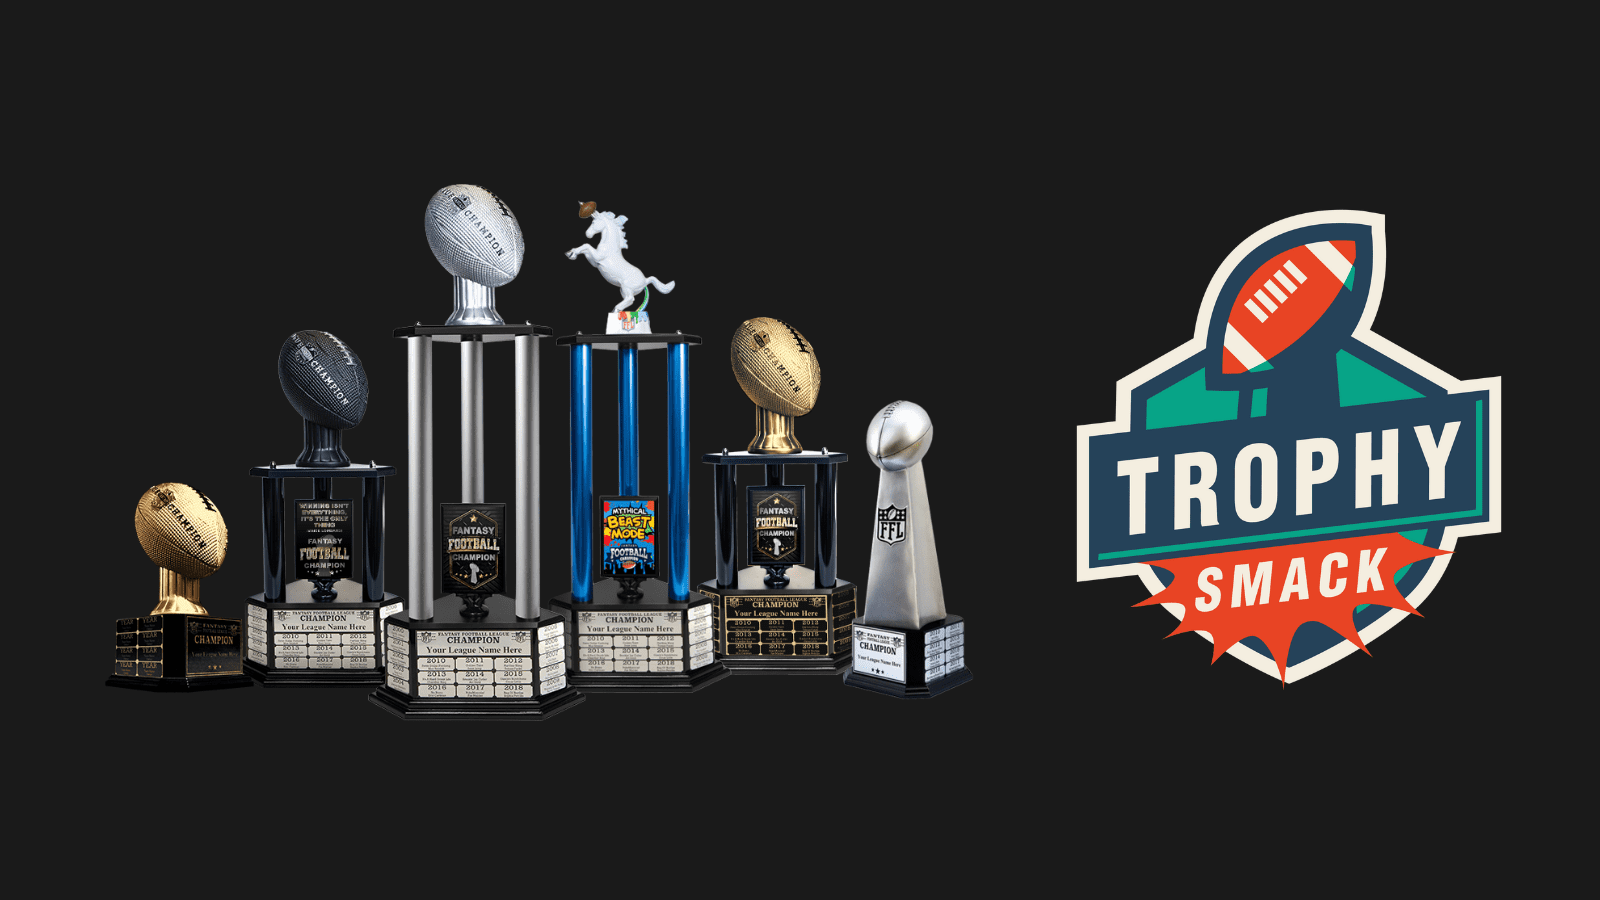 Fantasy Football Trophies - TrophySmack